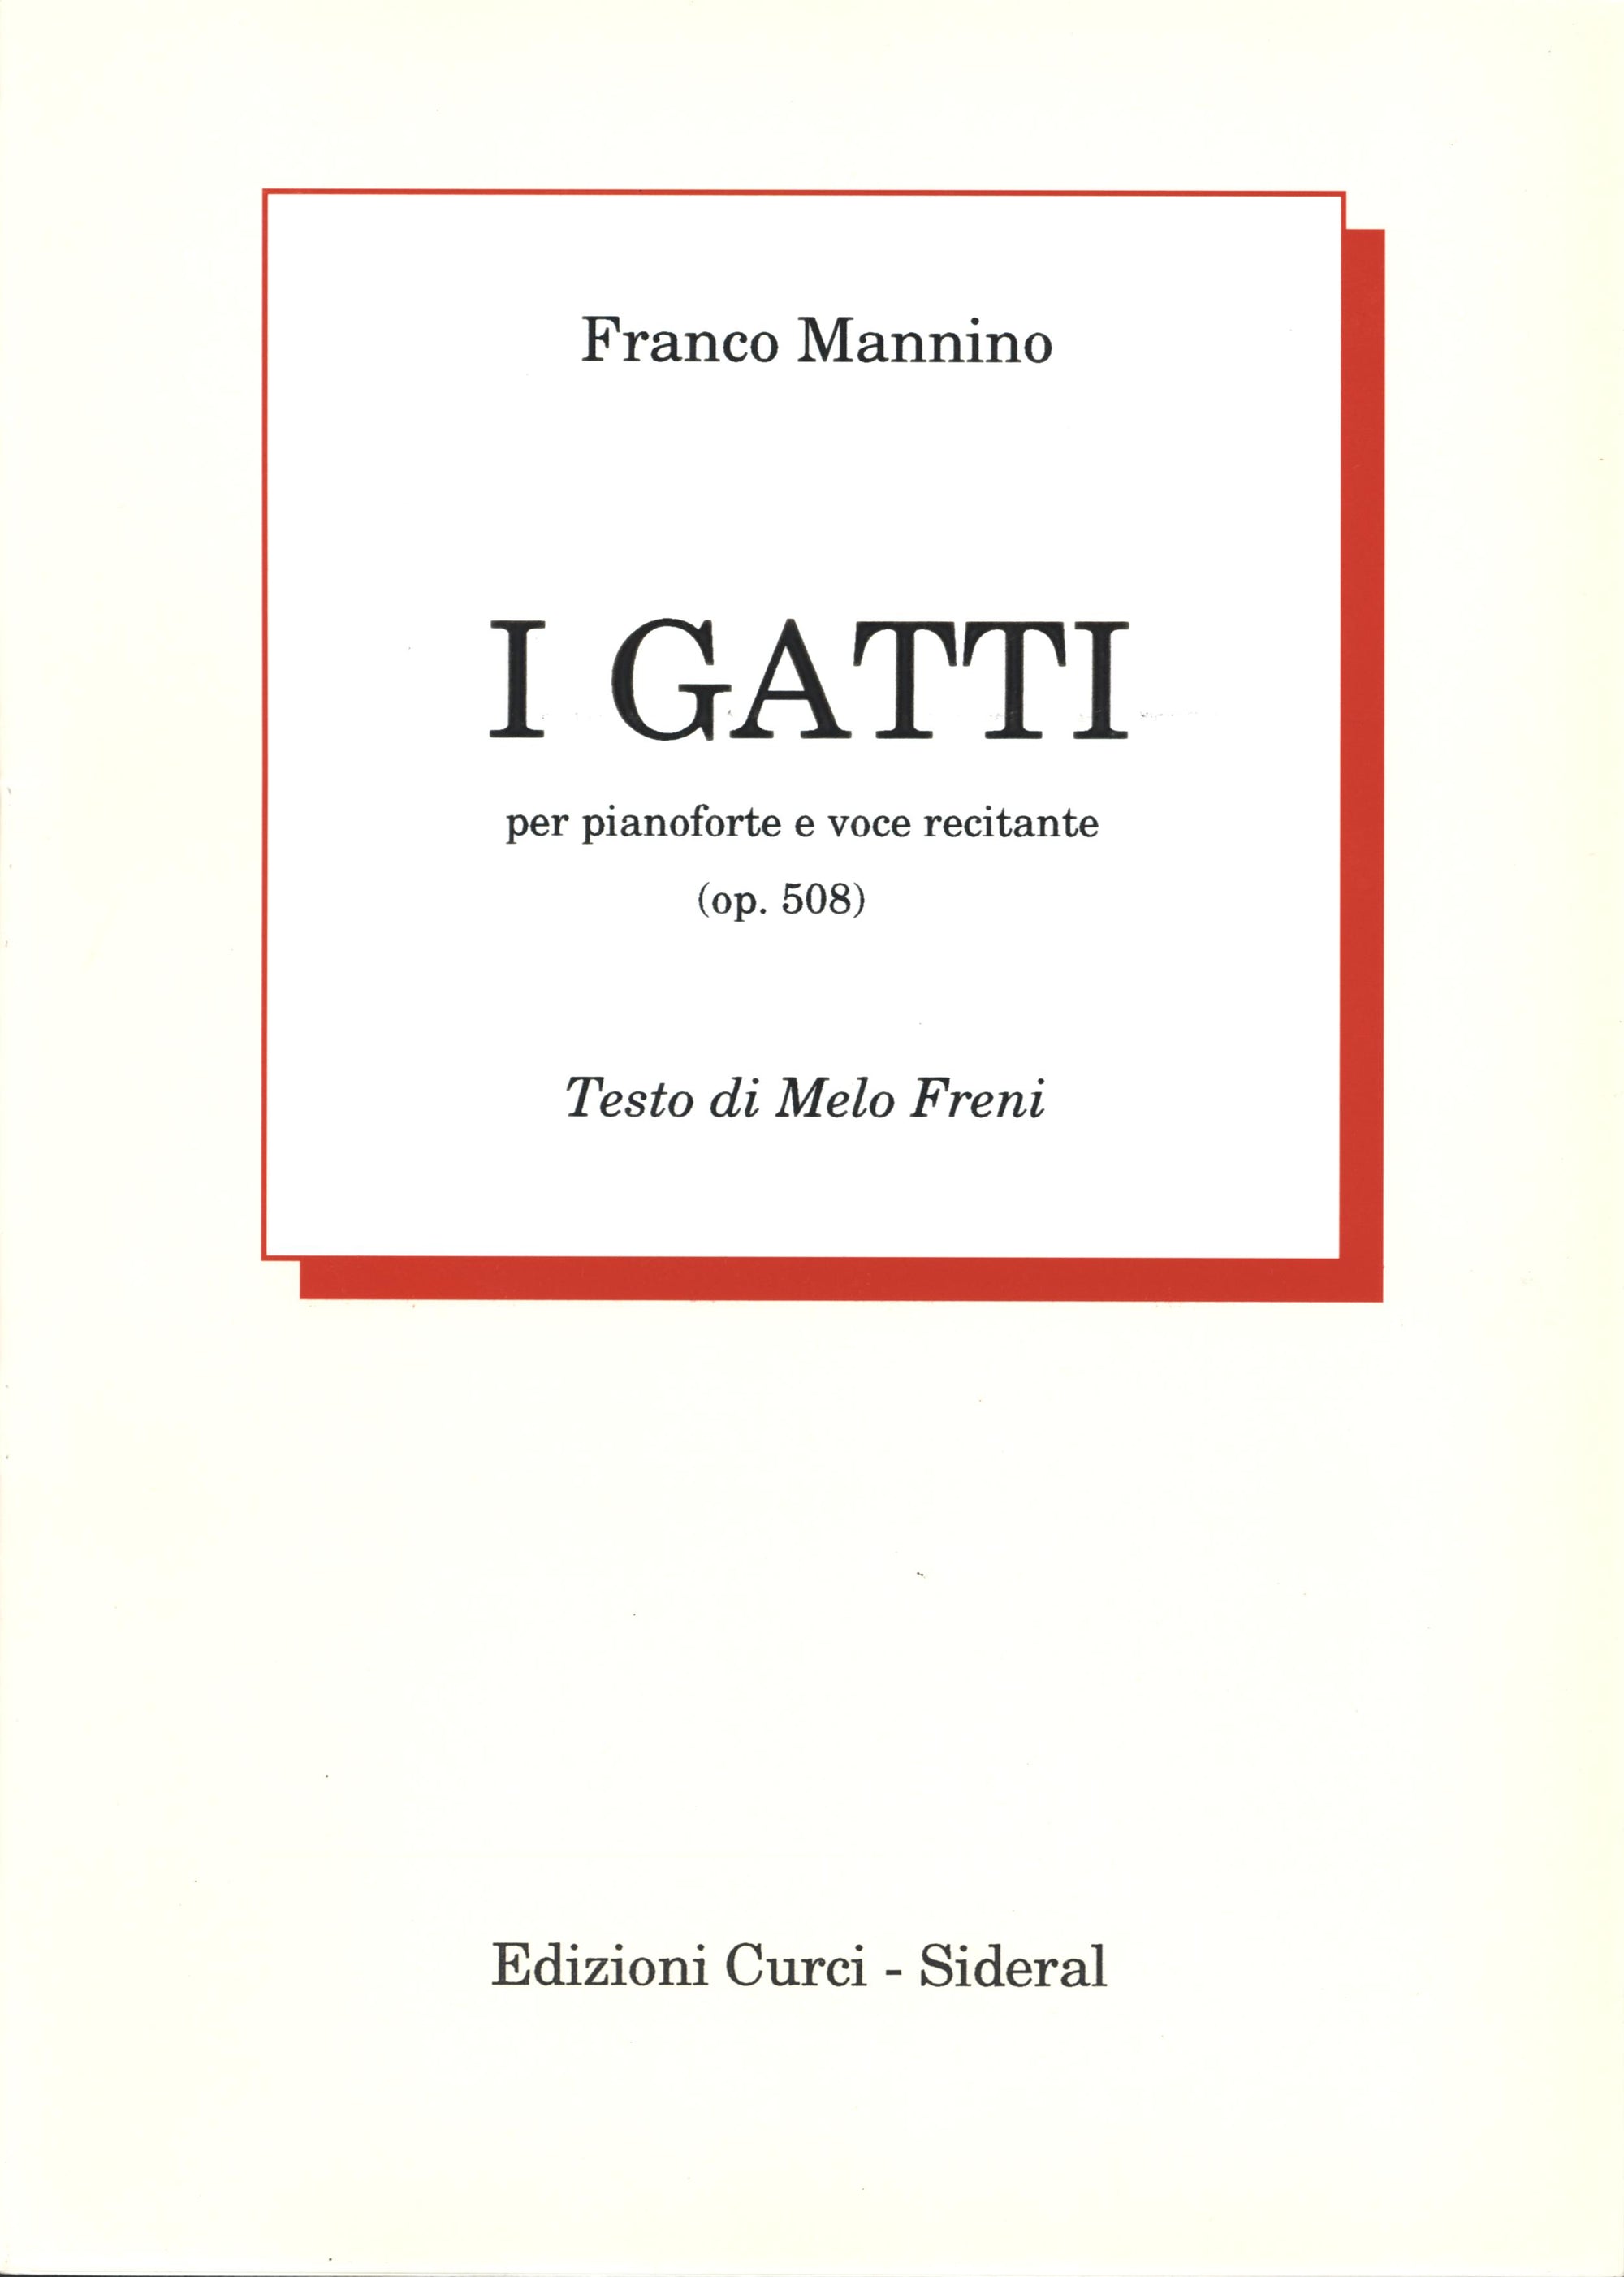 Mannino: I Gatti, Op. 508